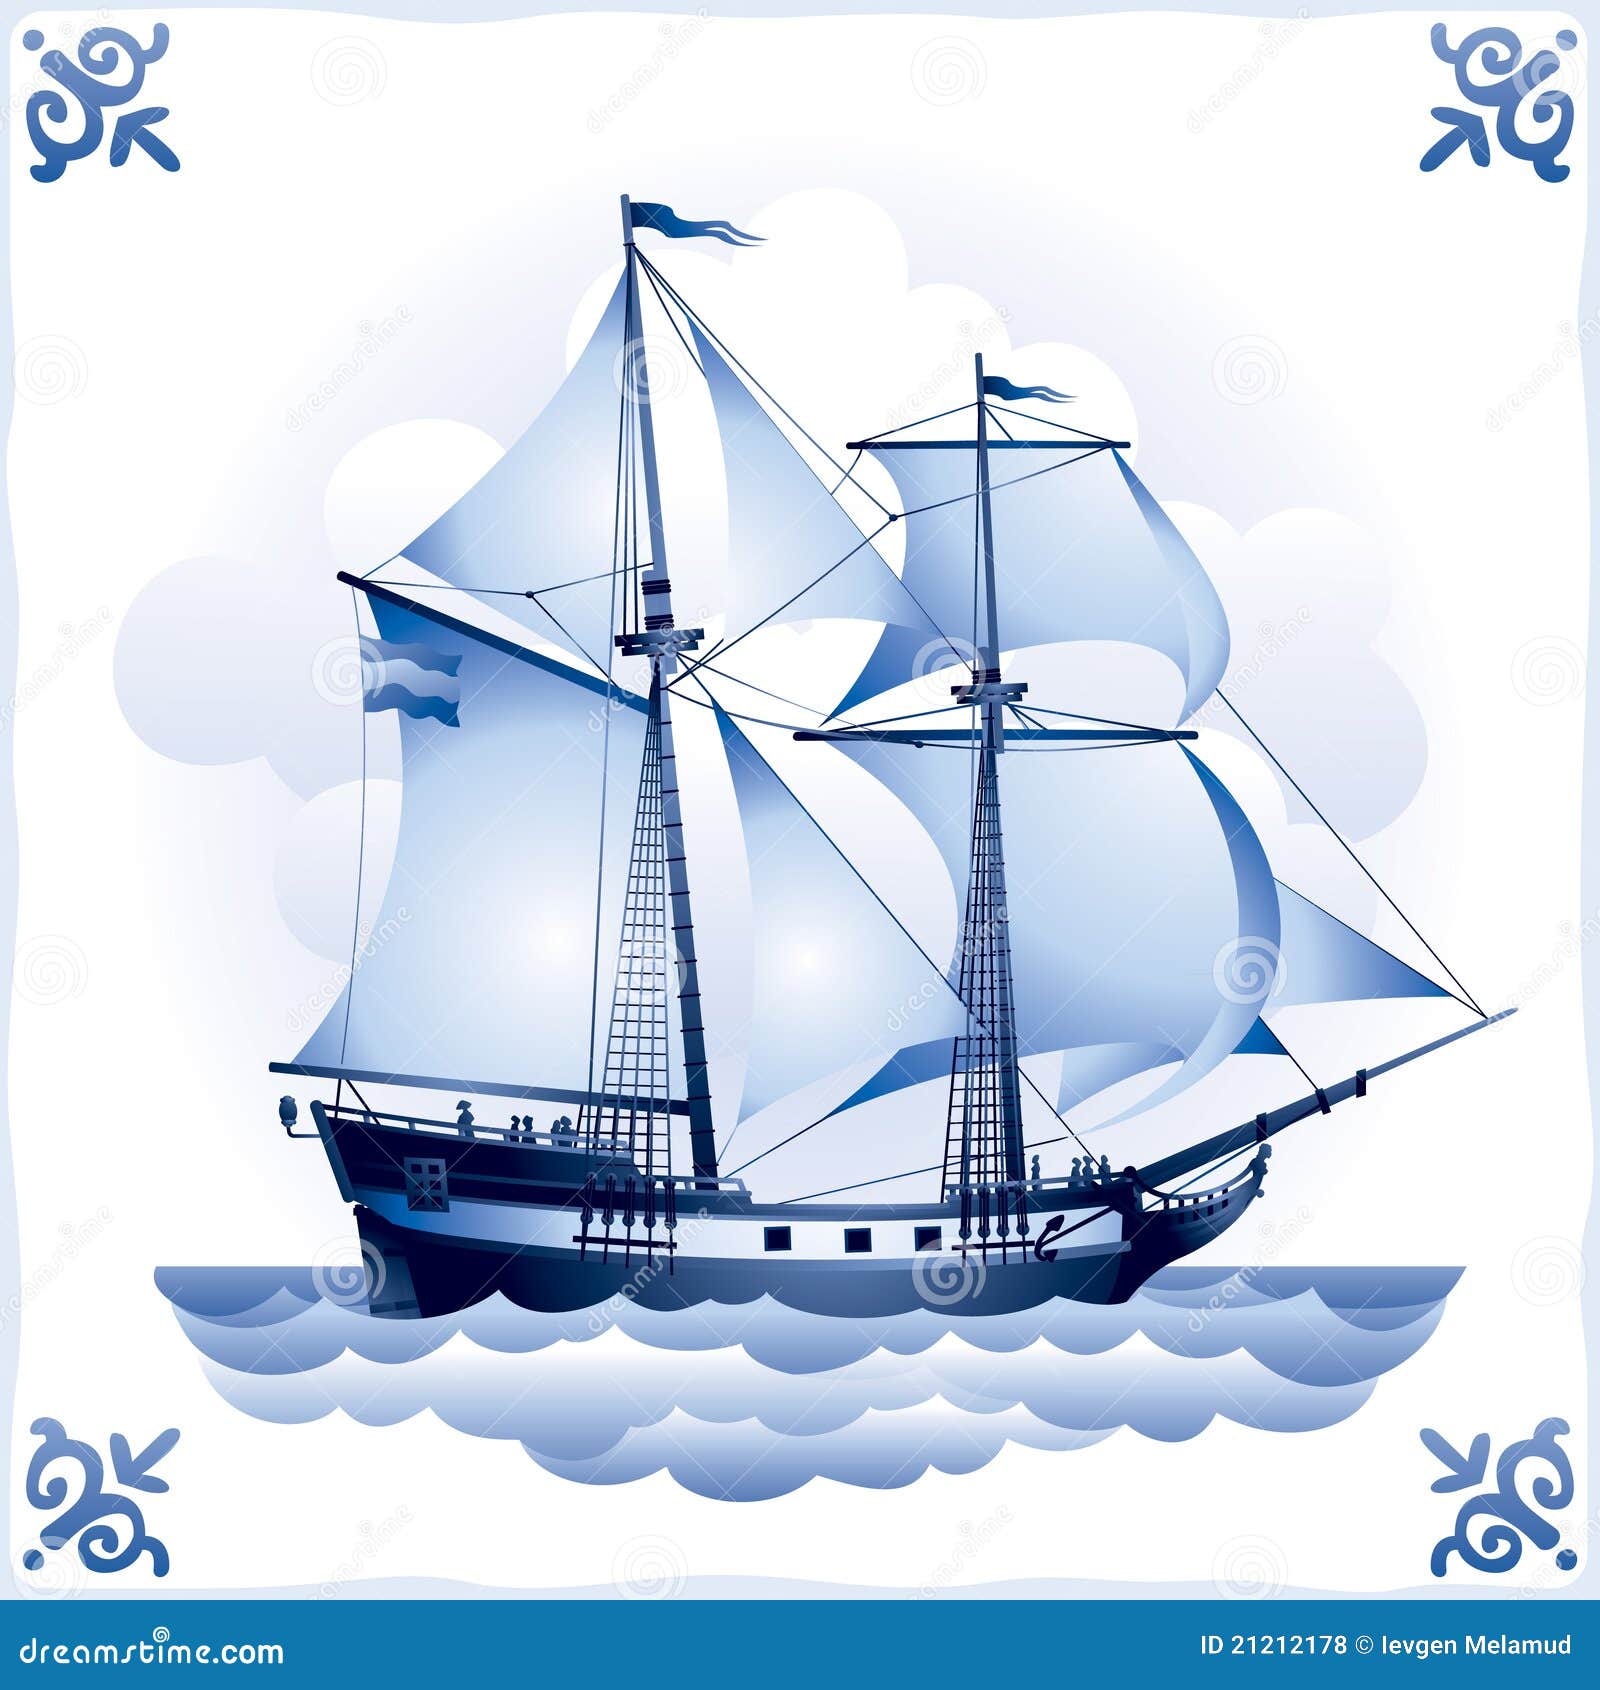 ship on the blue dutch tile 8, brigantine